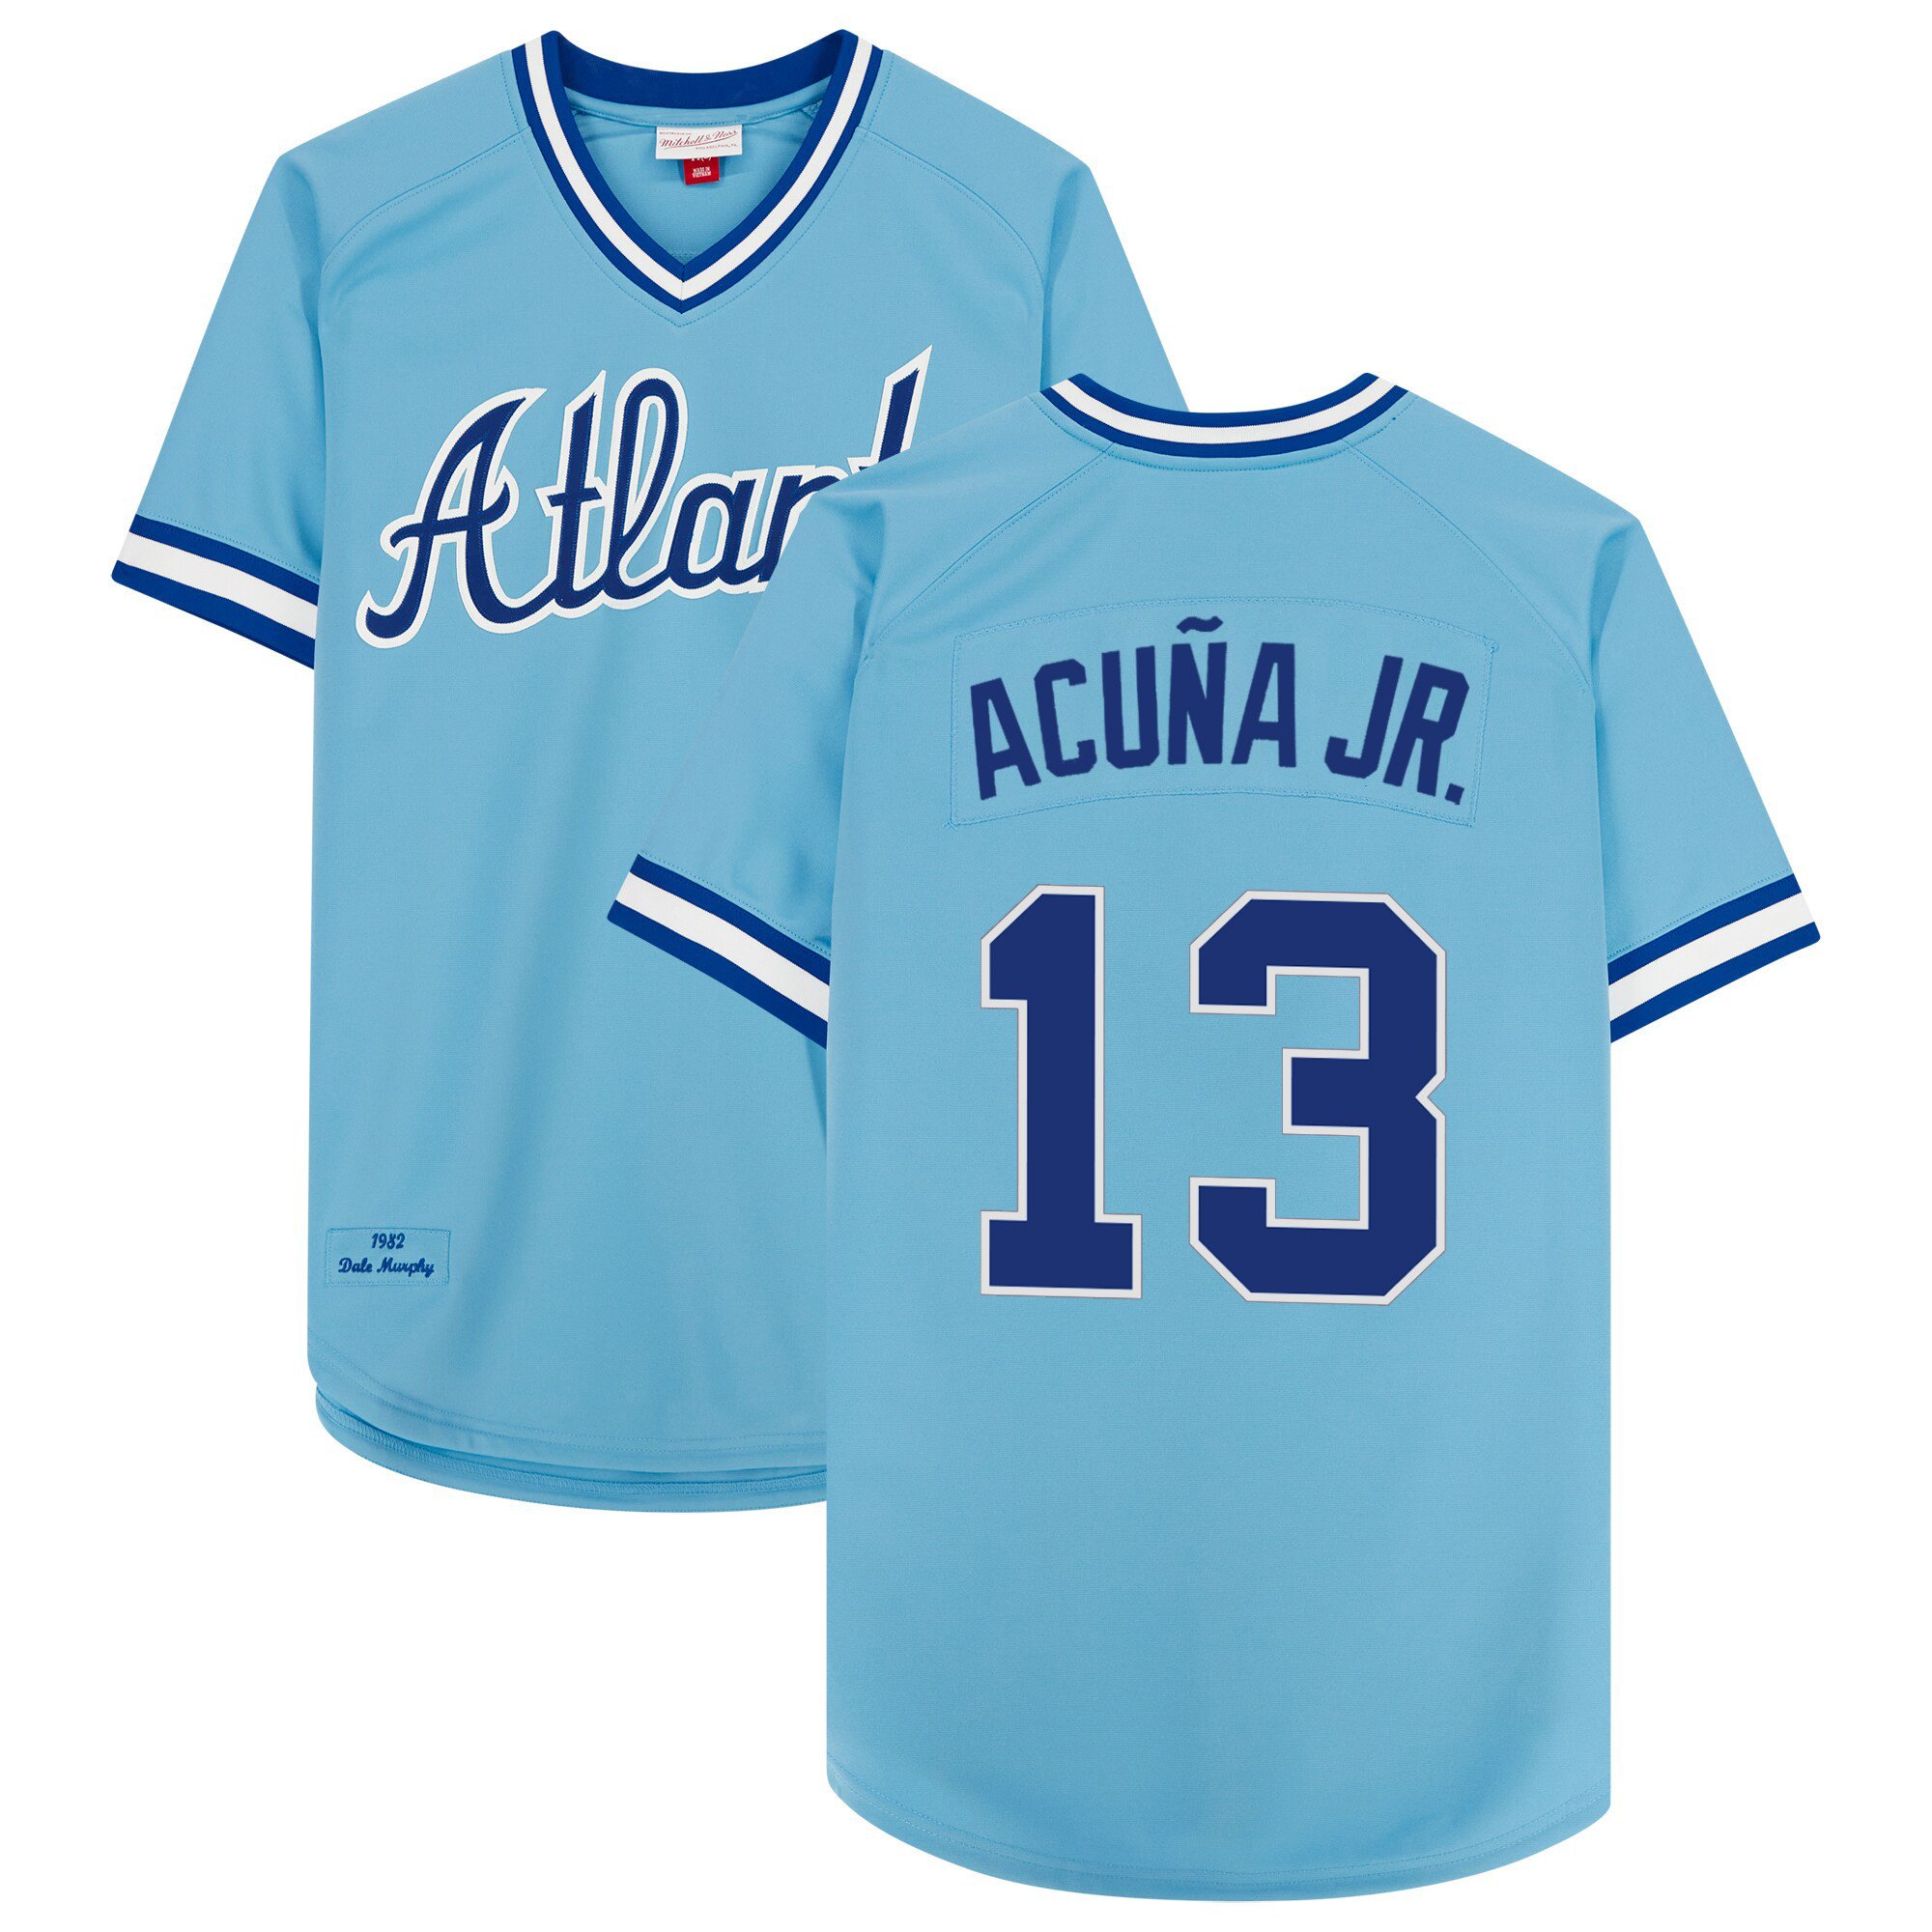 Ronald Acuna Jr. Men's Atlanta Braves Alternate Jersey - Cream Authentic